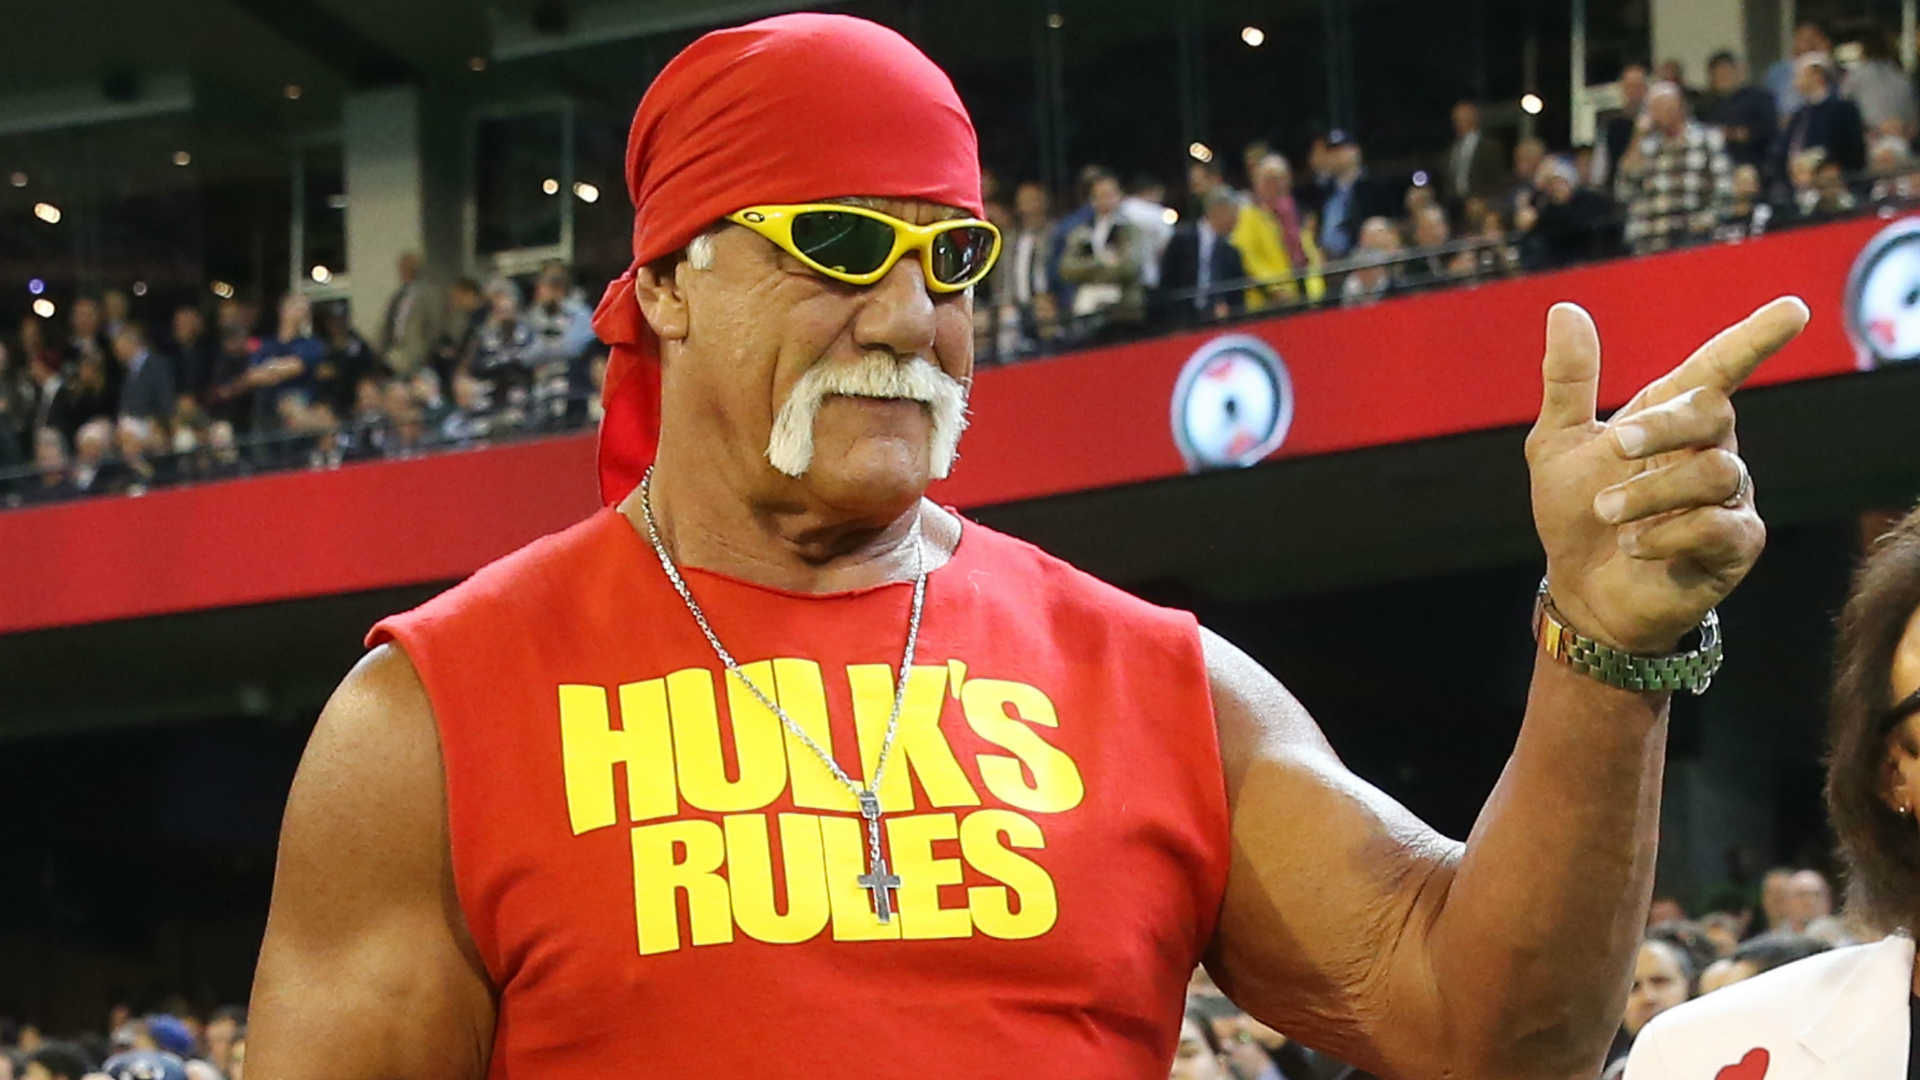 Hulk Hogan Wallpaper Image Photos Pictures Background